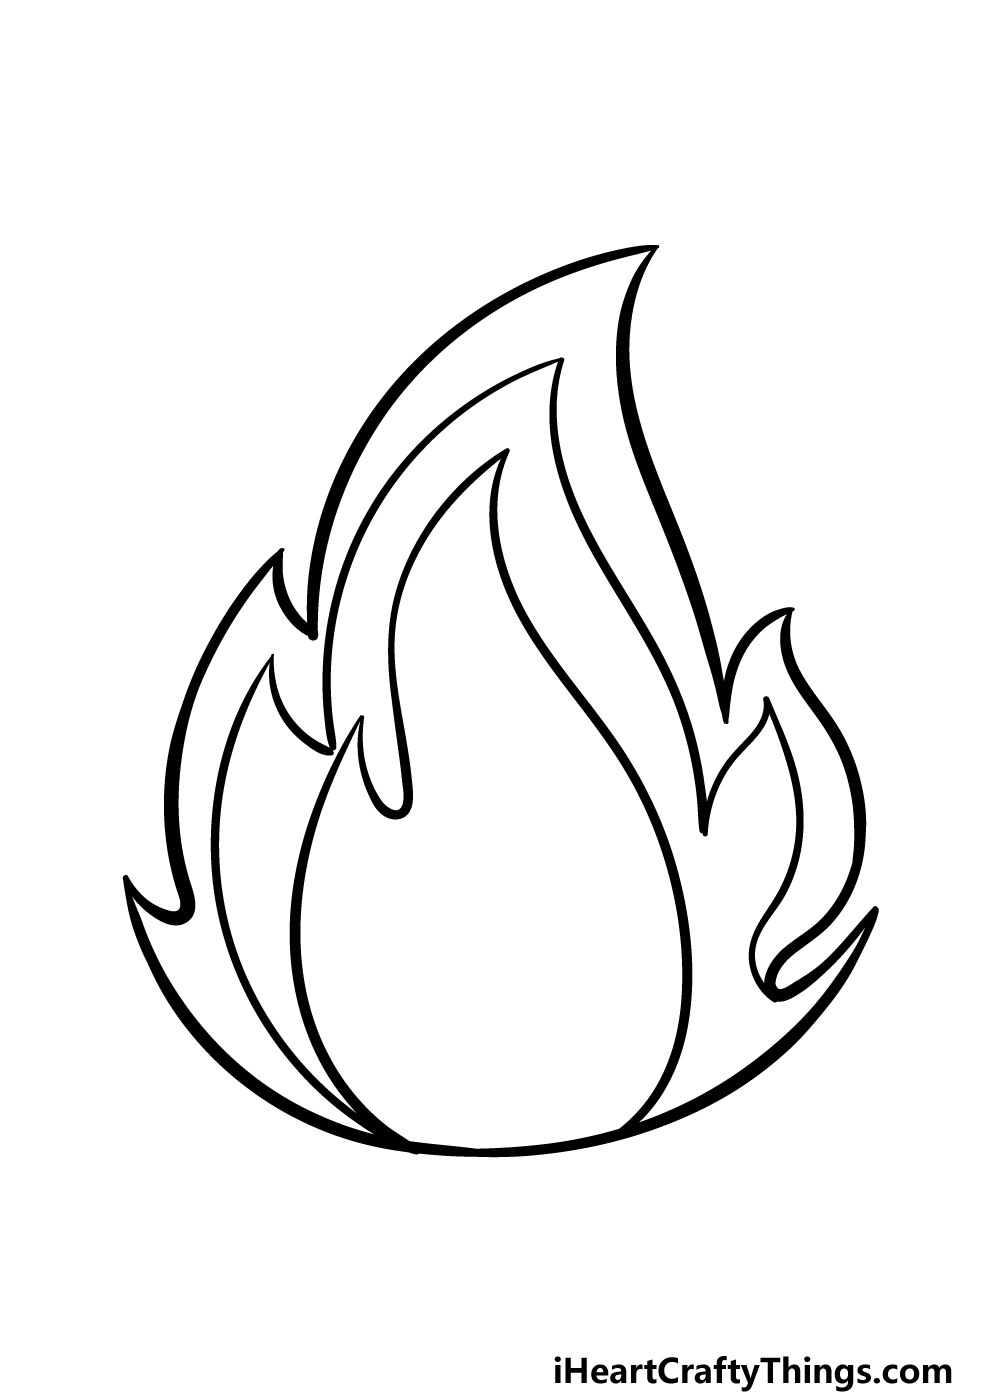 how to draw a cartoon flame step 4